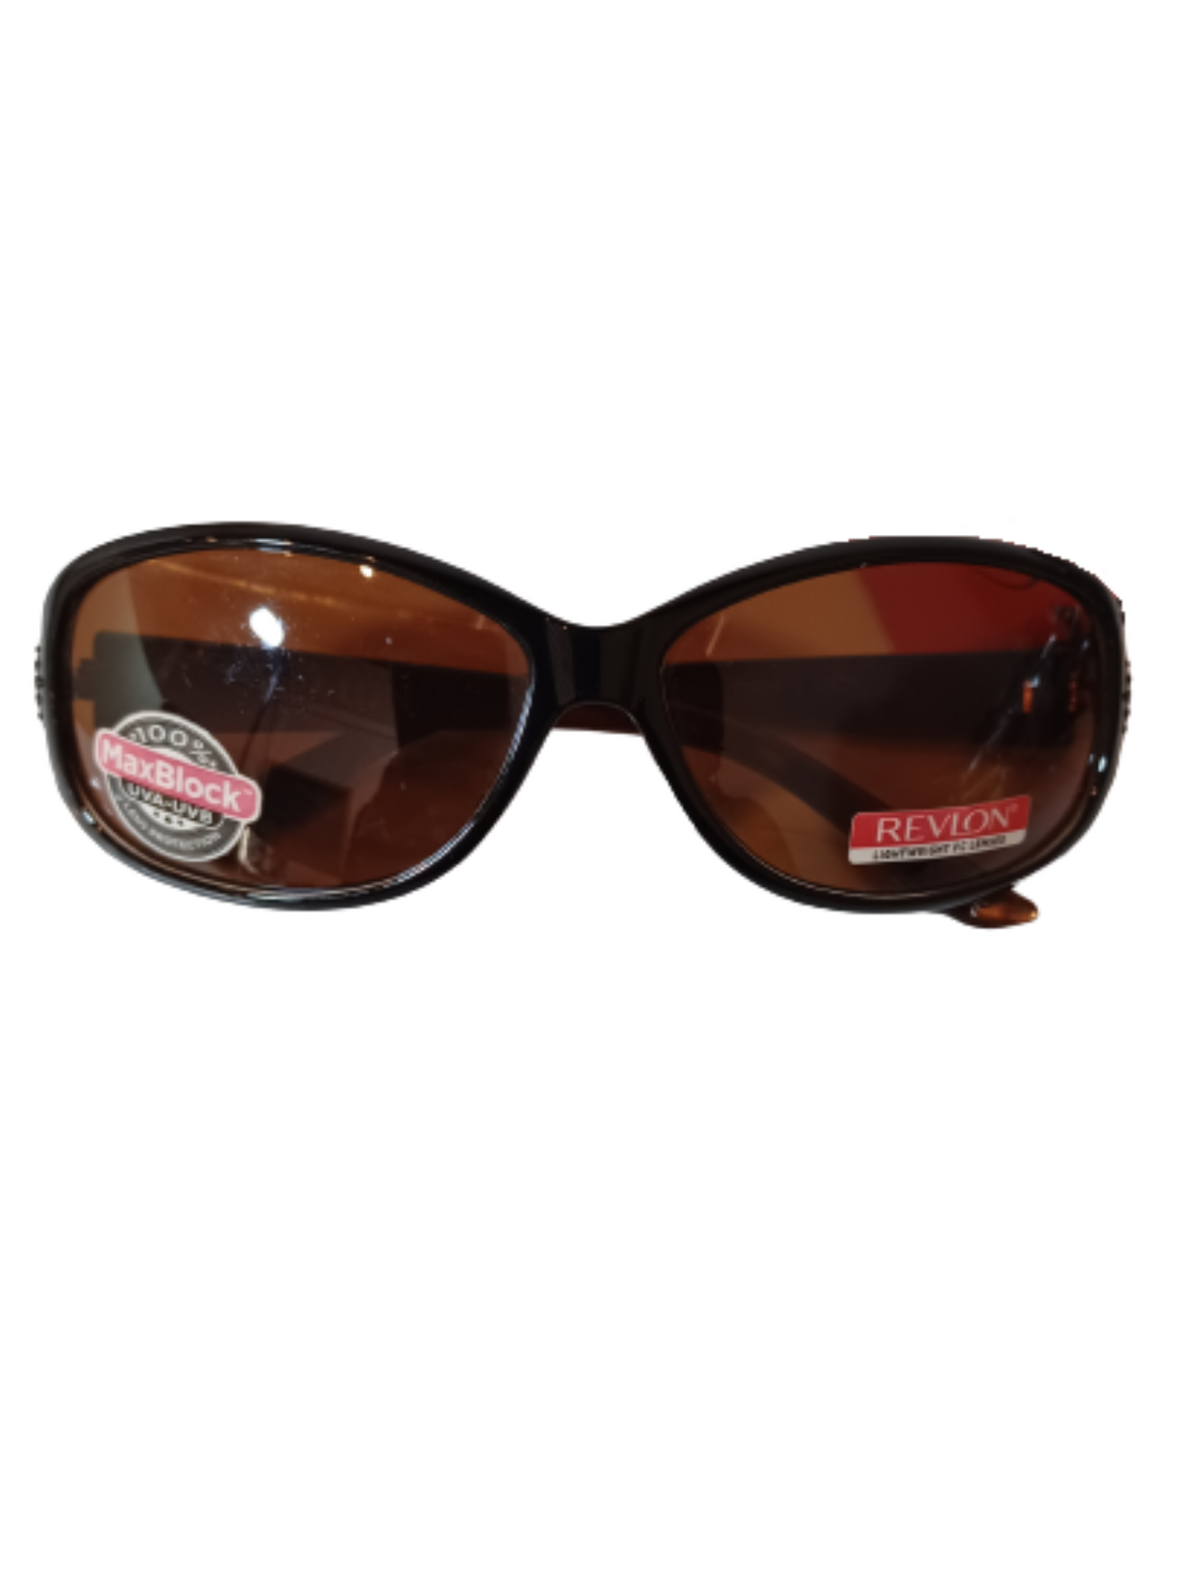 Revlon brown Sunglasses